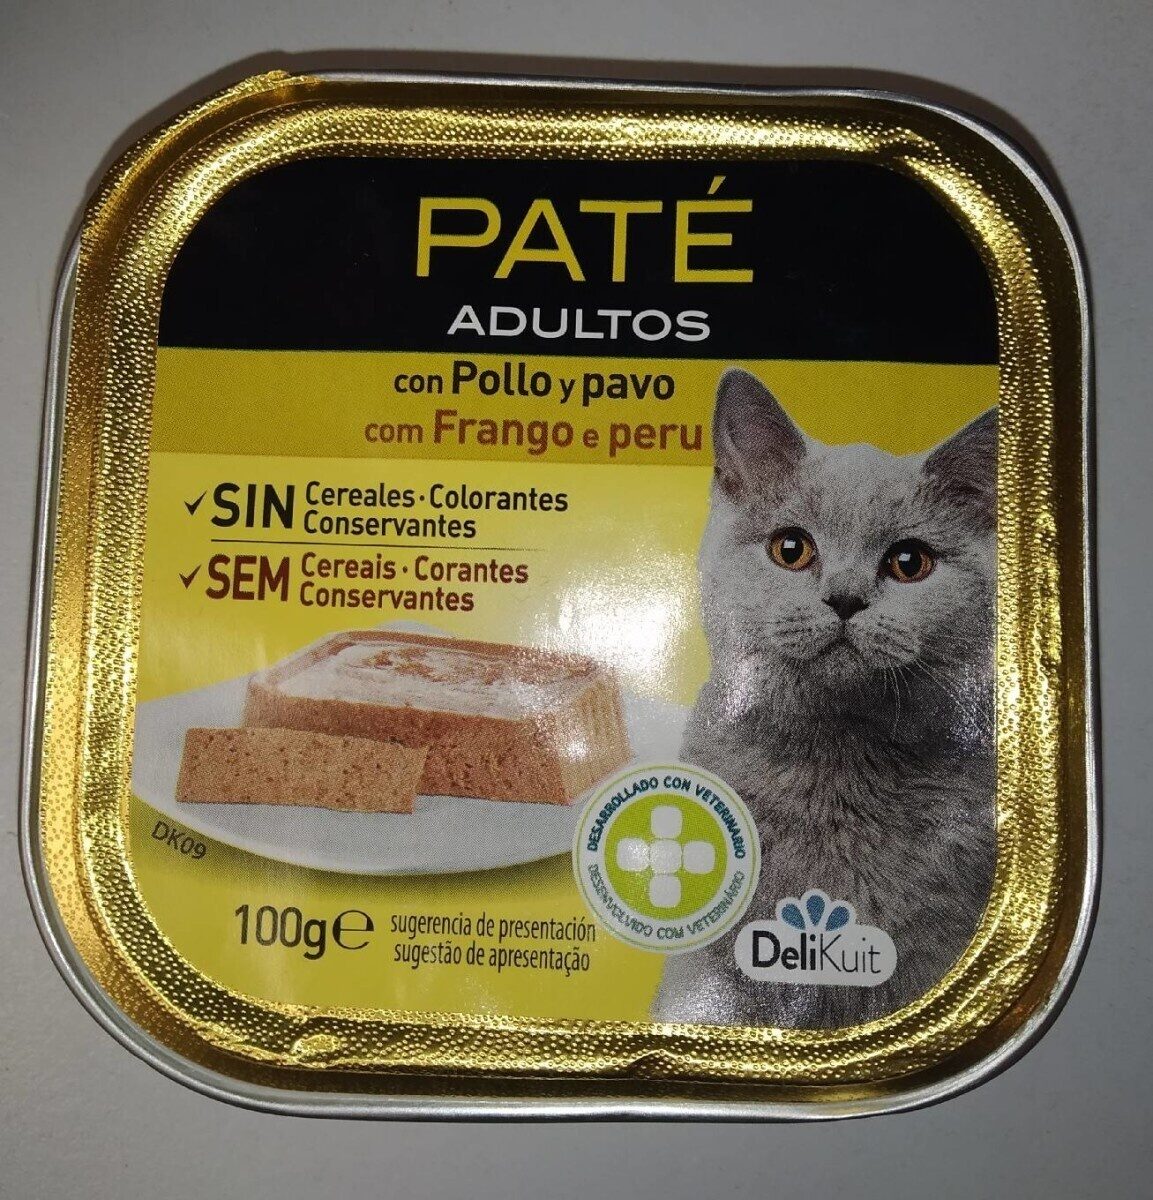 Paté adultos de gatos - Product - es